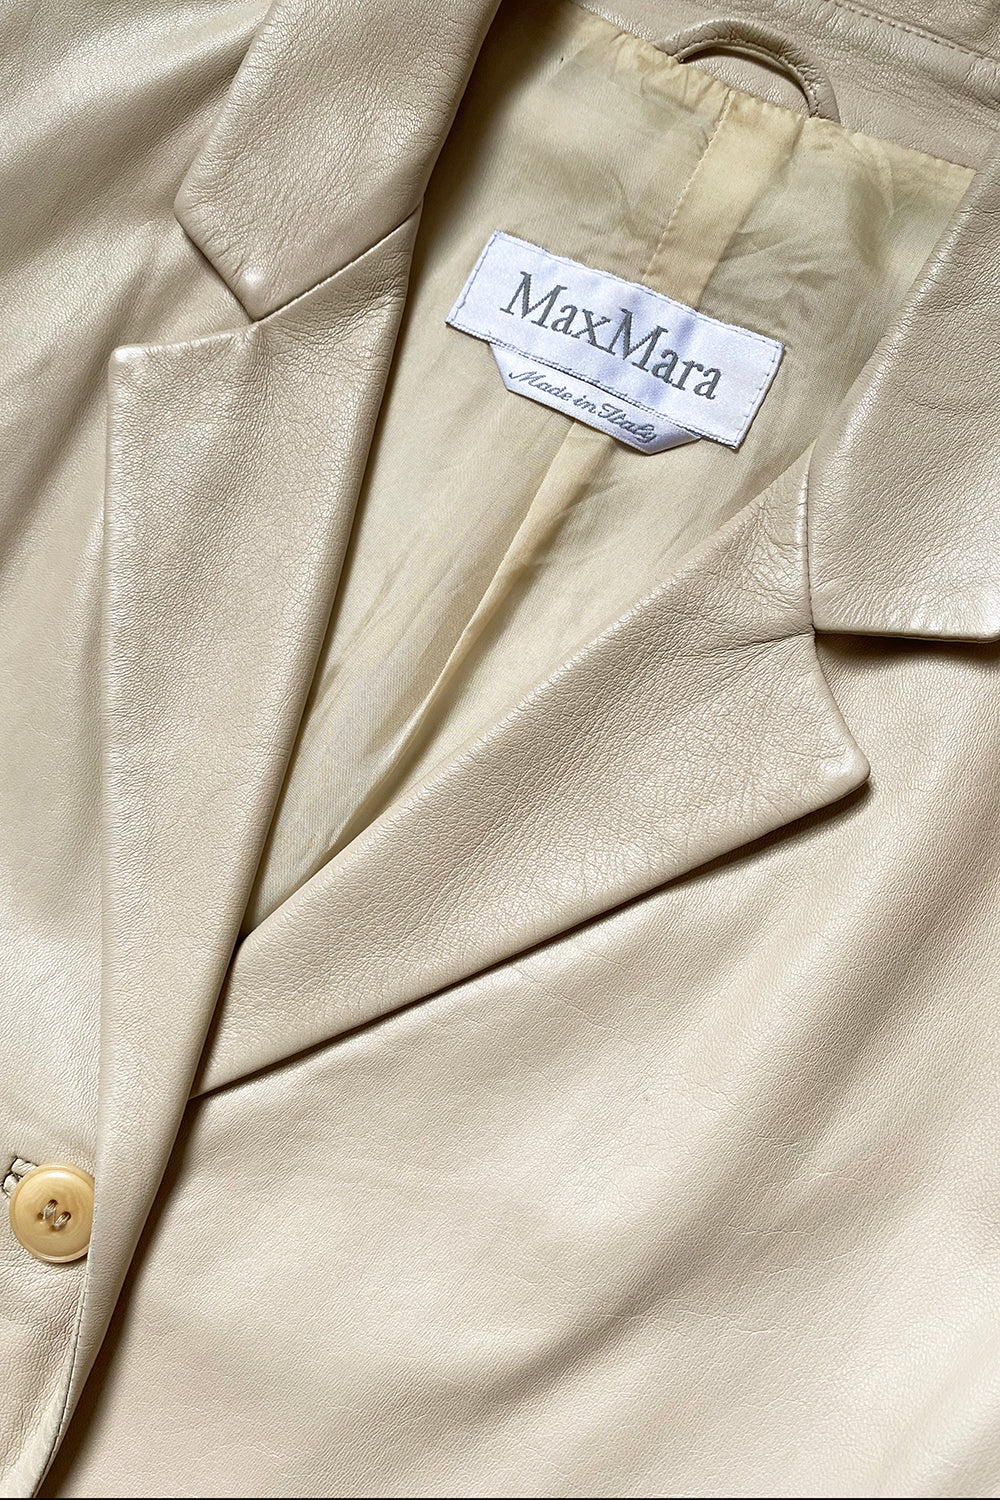 Max Mara Cream Nappa Leather Blazer Size 12 (Fits UK 8-12)